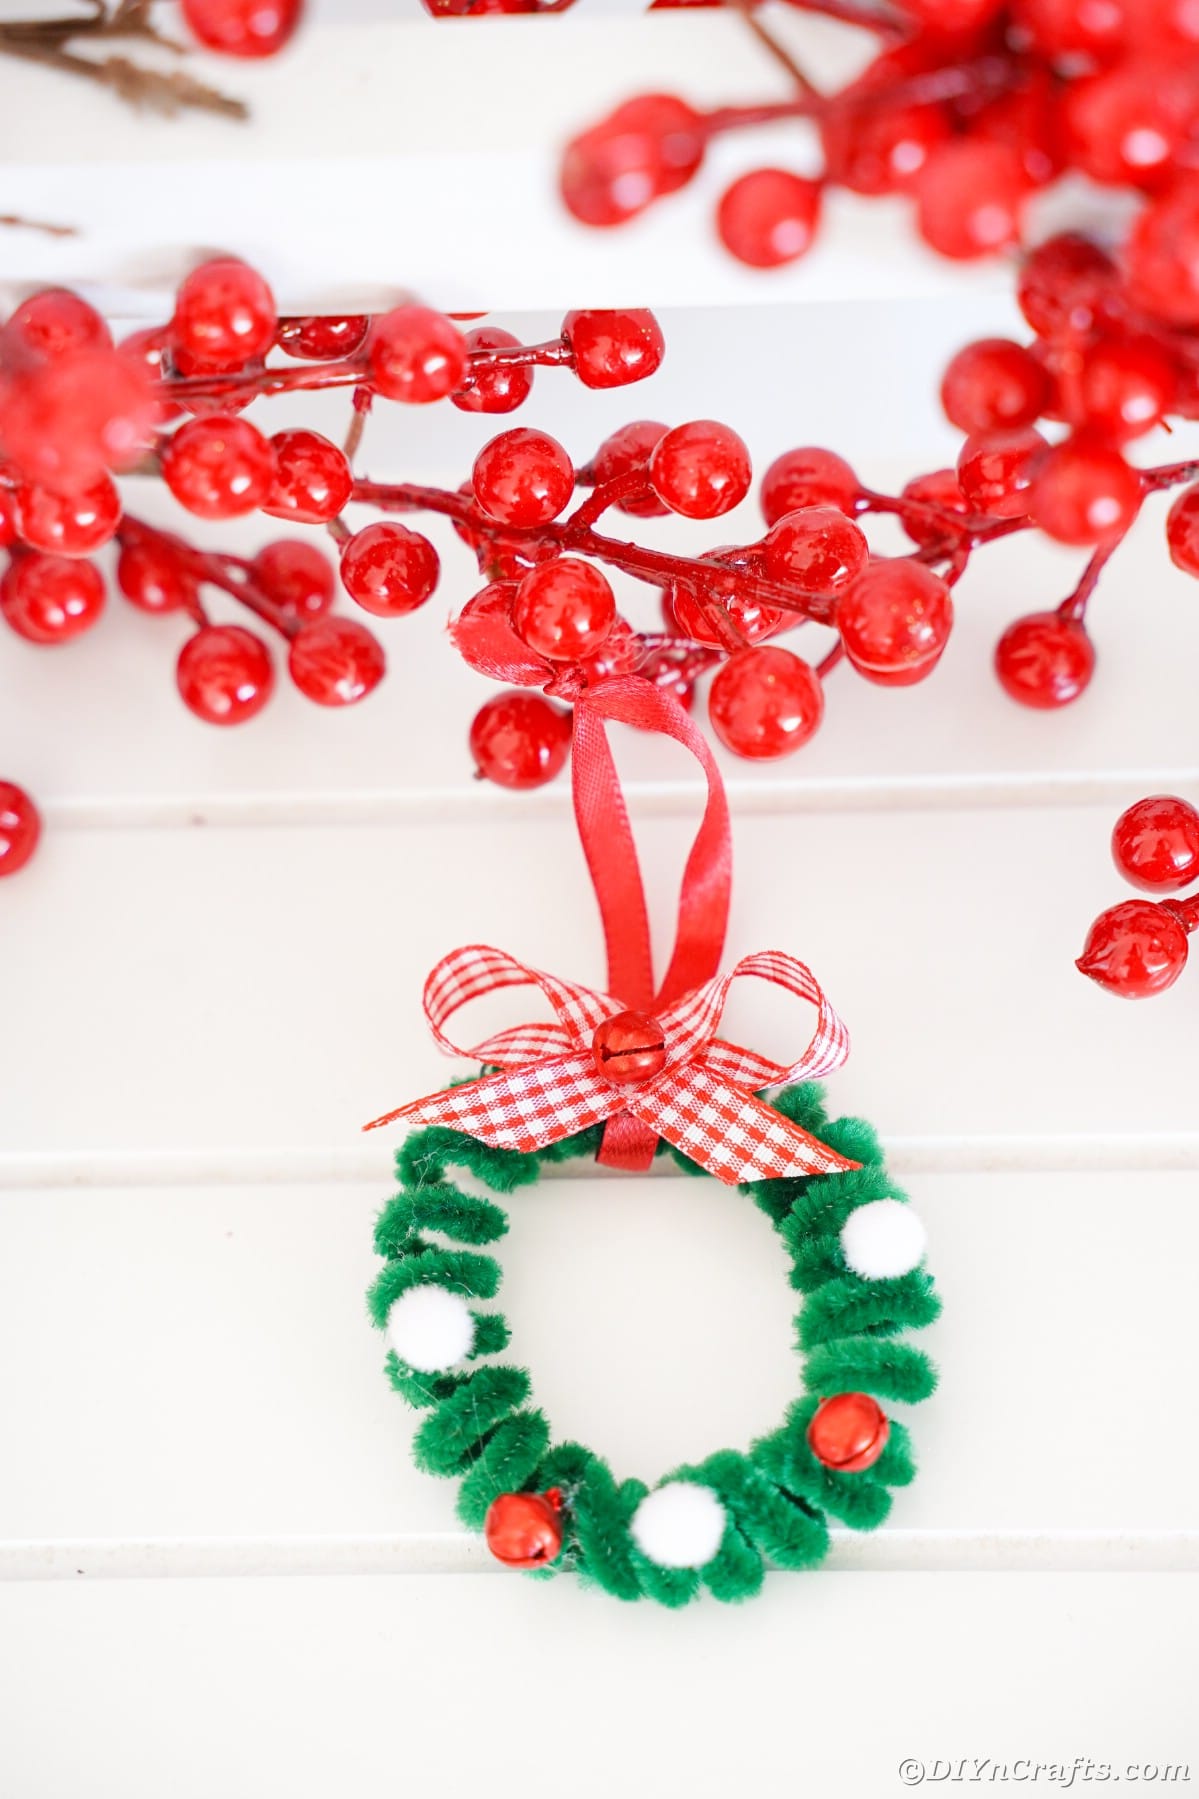 green wreath mini ornament hanging on berries